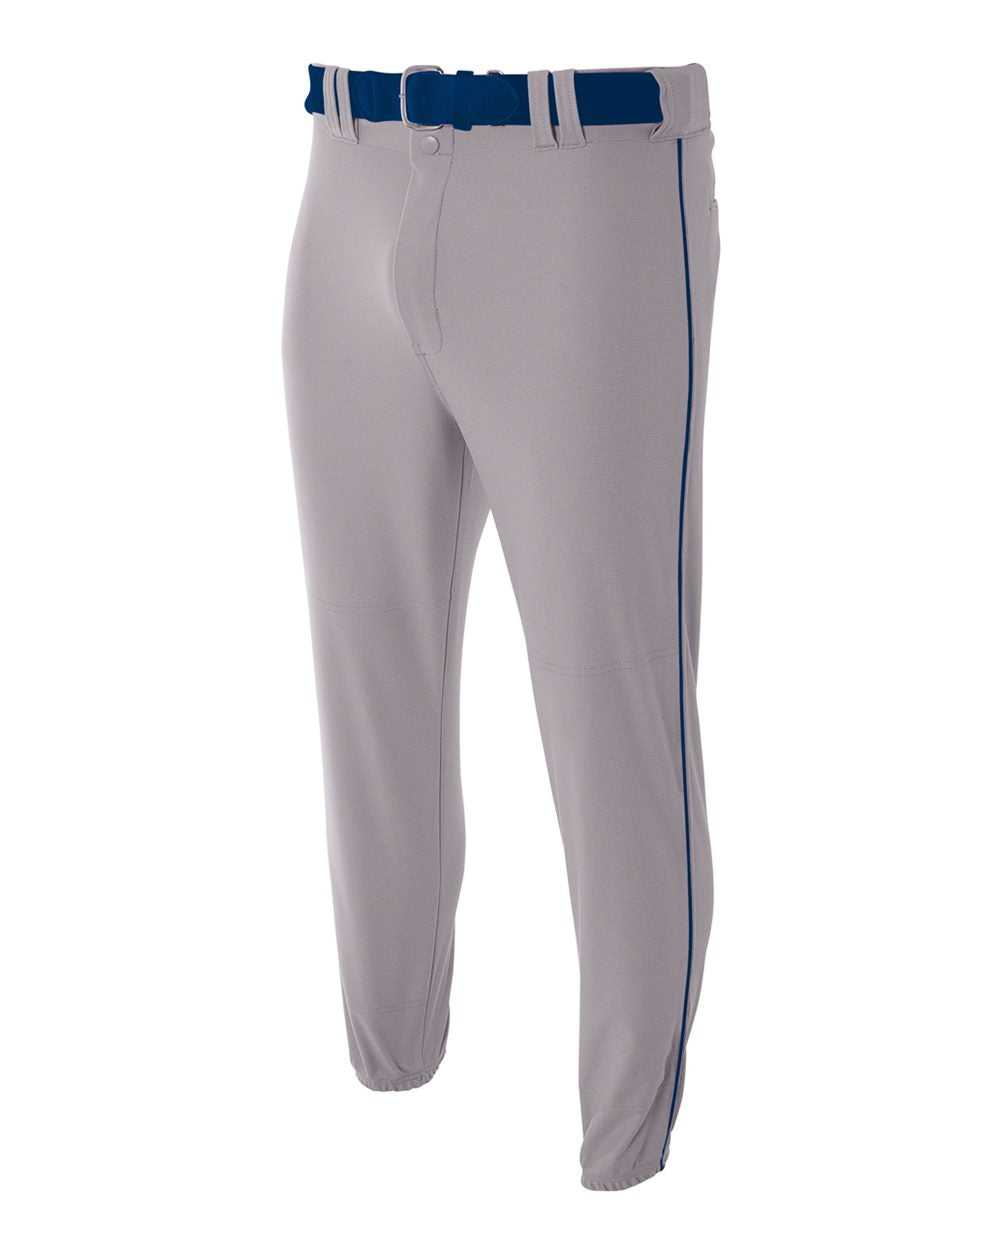 A4 NB6178 Youth Pro Style Elastic Bottom Baseball Pant - Gray Navy - HIT a Double